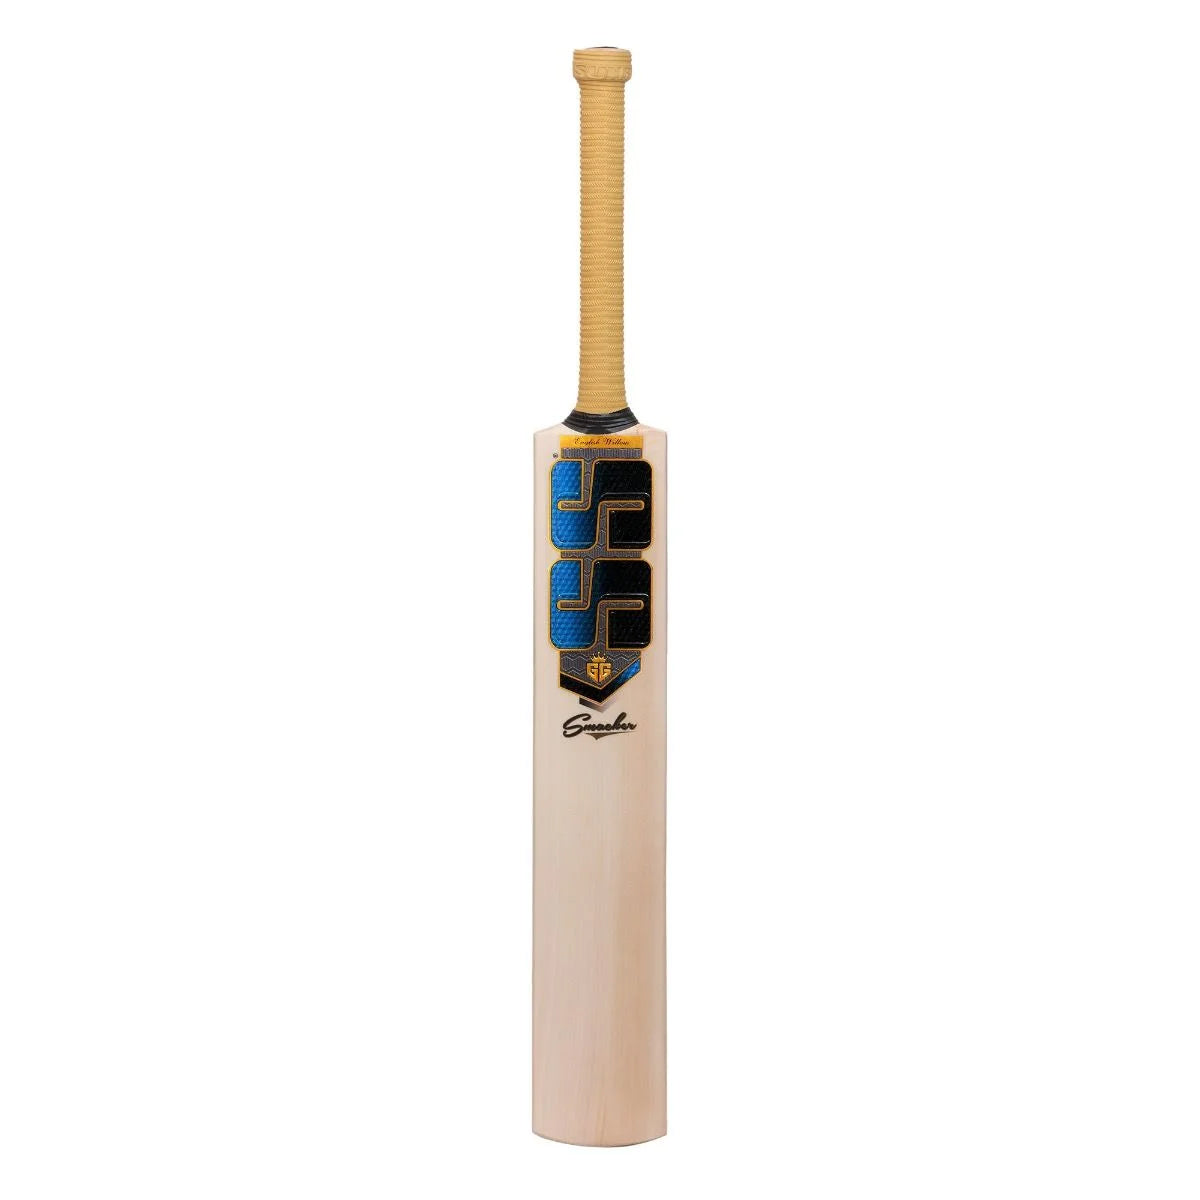 SS GG Smacker Players English Willow Cricket Bat - Best Price online Prokicksports.com